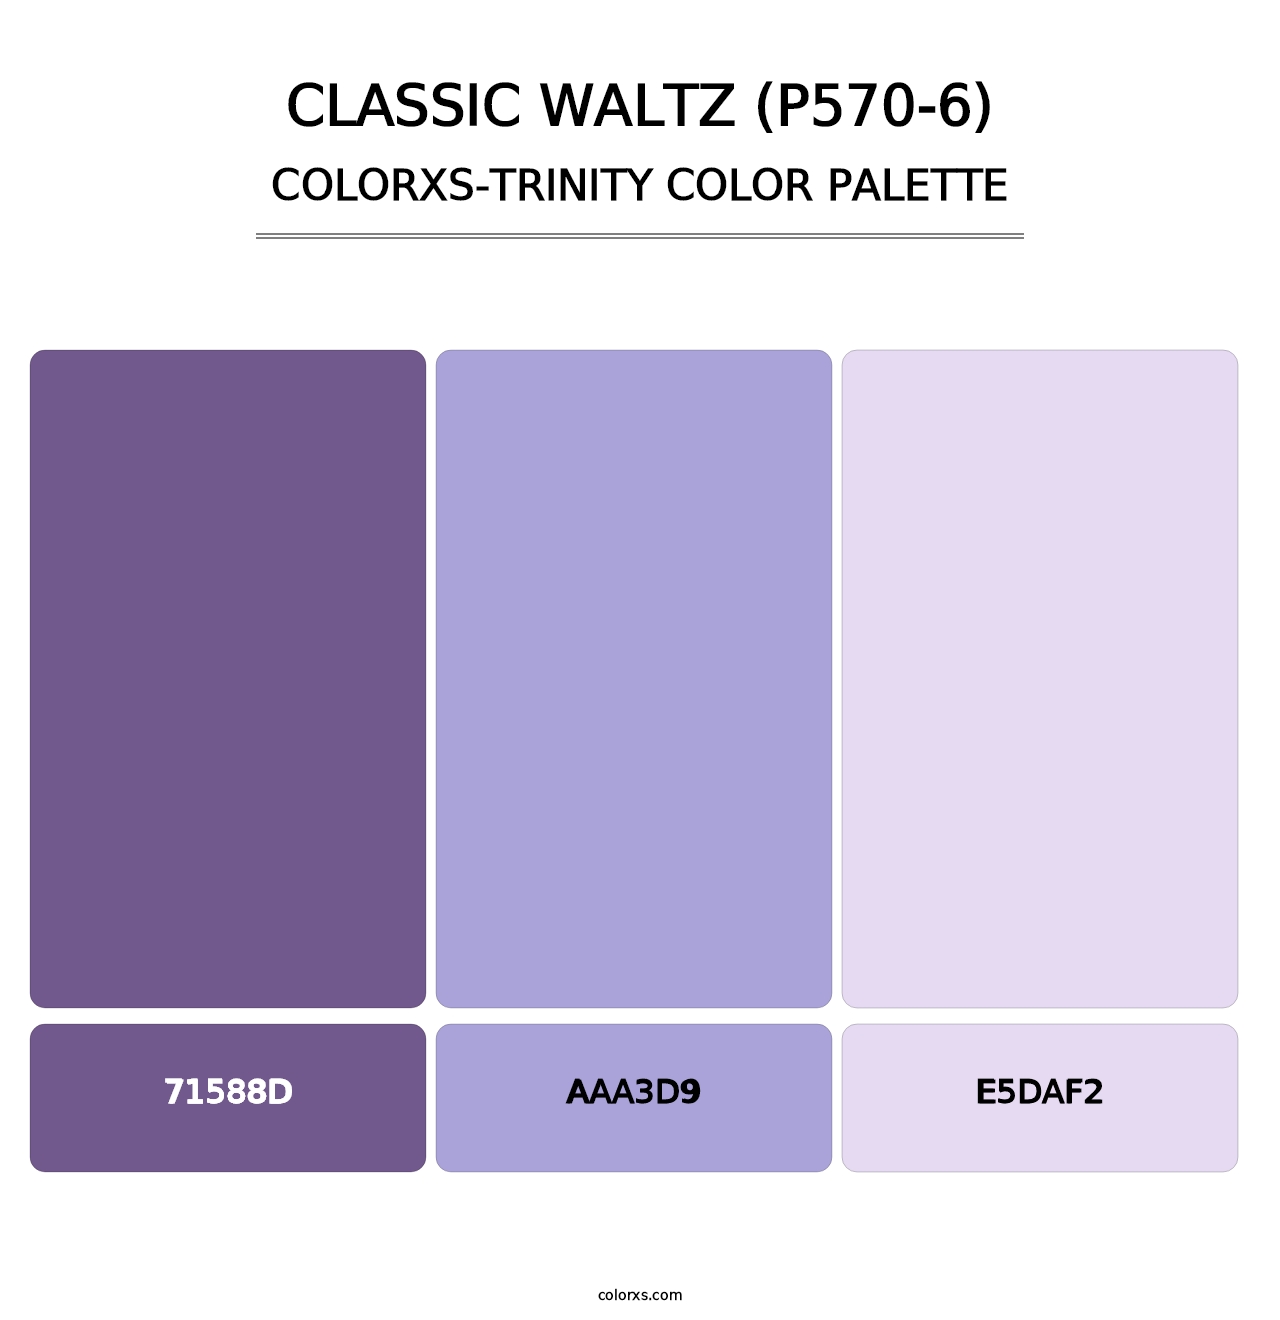 Classic Waltz (P570-6) - Colorxs Trinity Palette